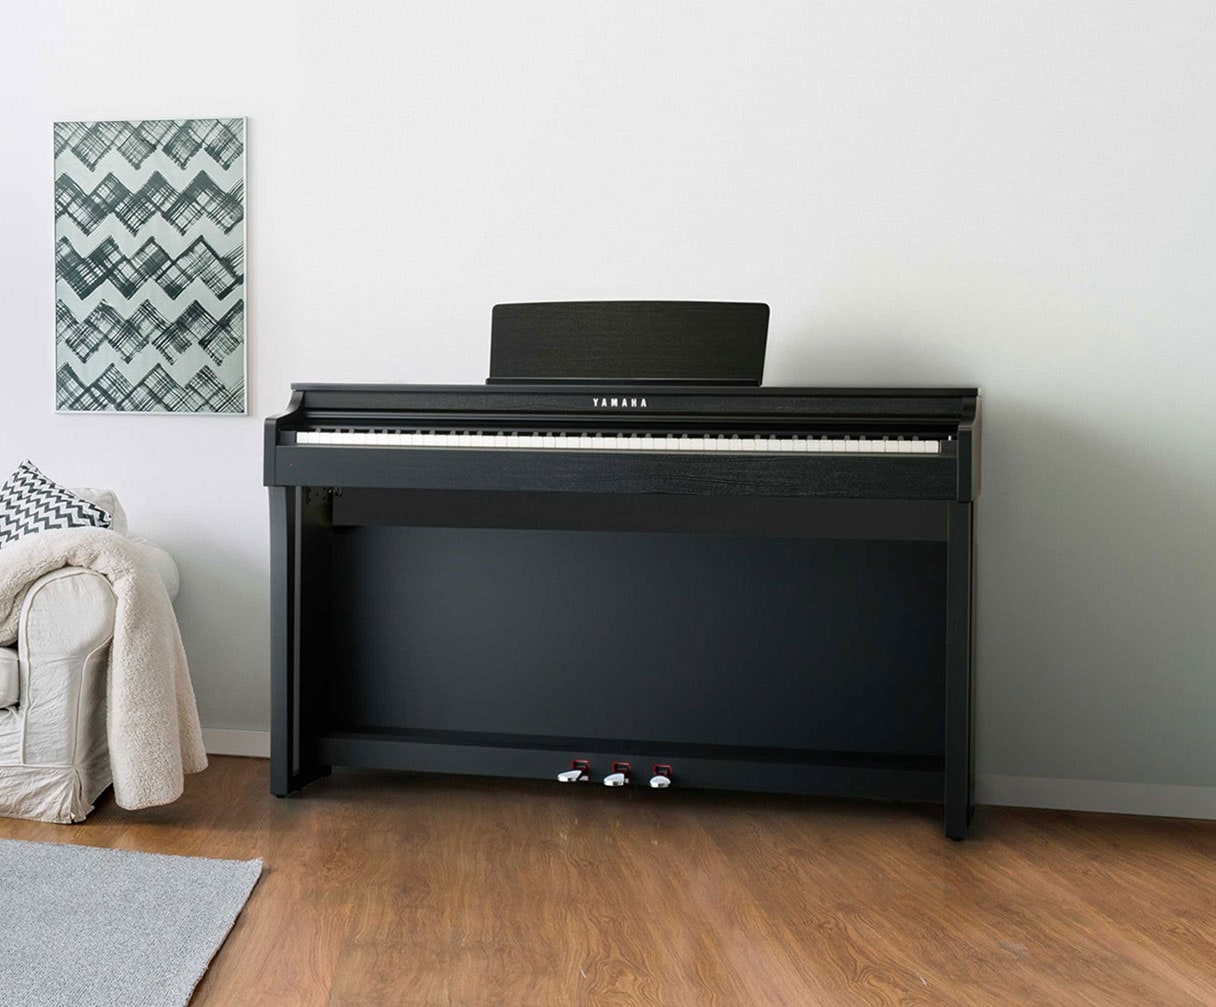  lifestyle image showing Yamaha Clavinova piano in a room